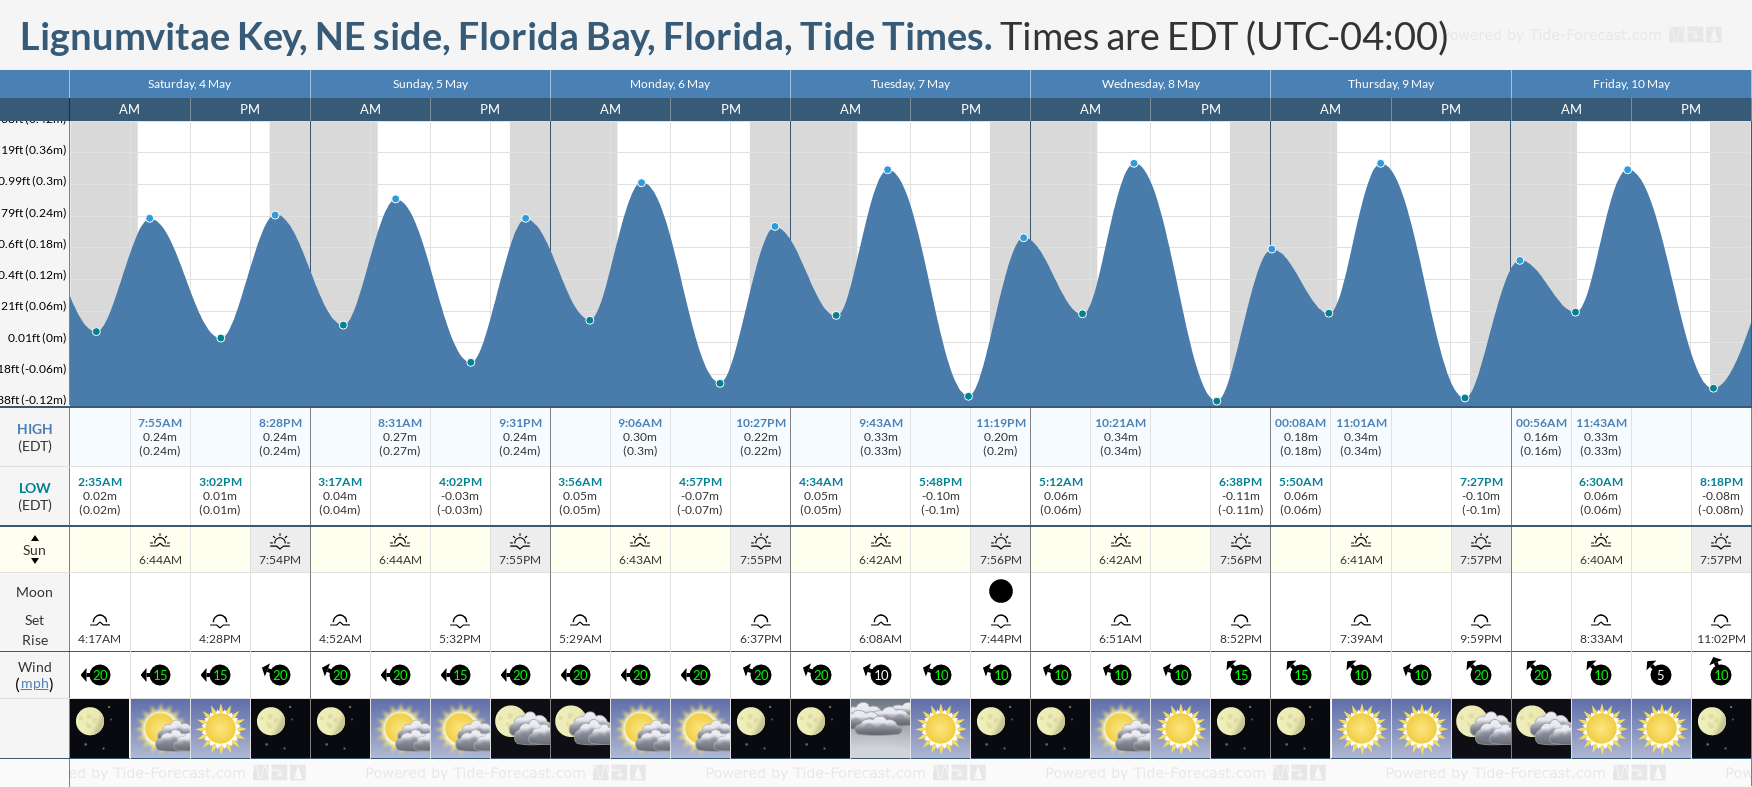 Lignumvitae Key, NE side, Florida Bay, Florida Tide Chart including high and low tide times for the next 7 days